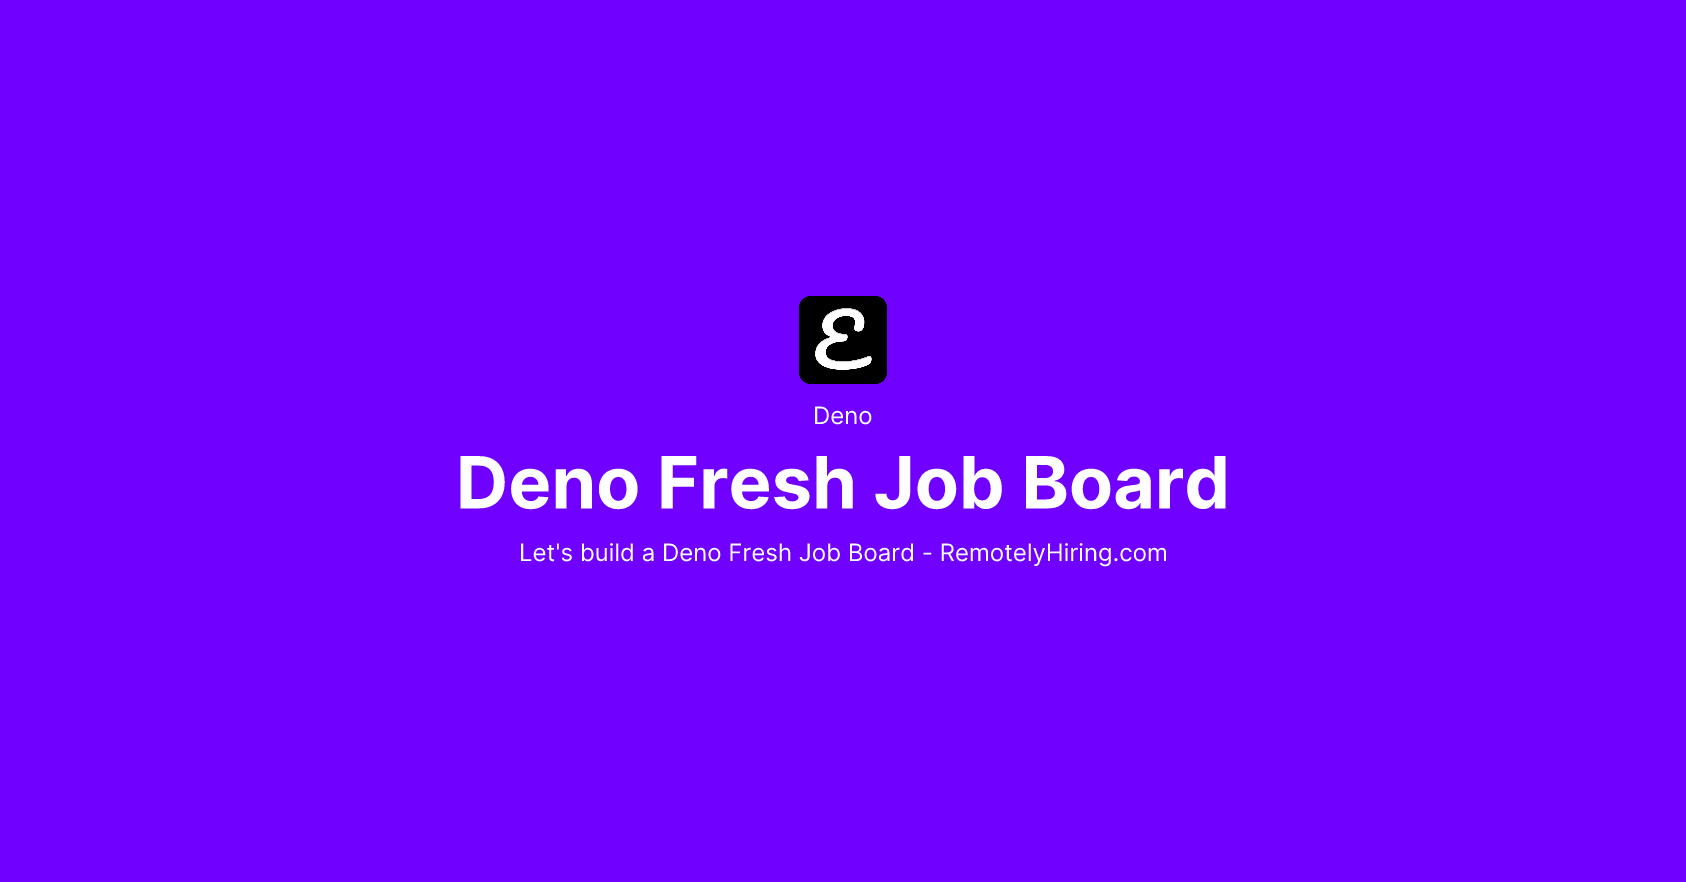 Deno Fresh Job Board by Eric David Smith